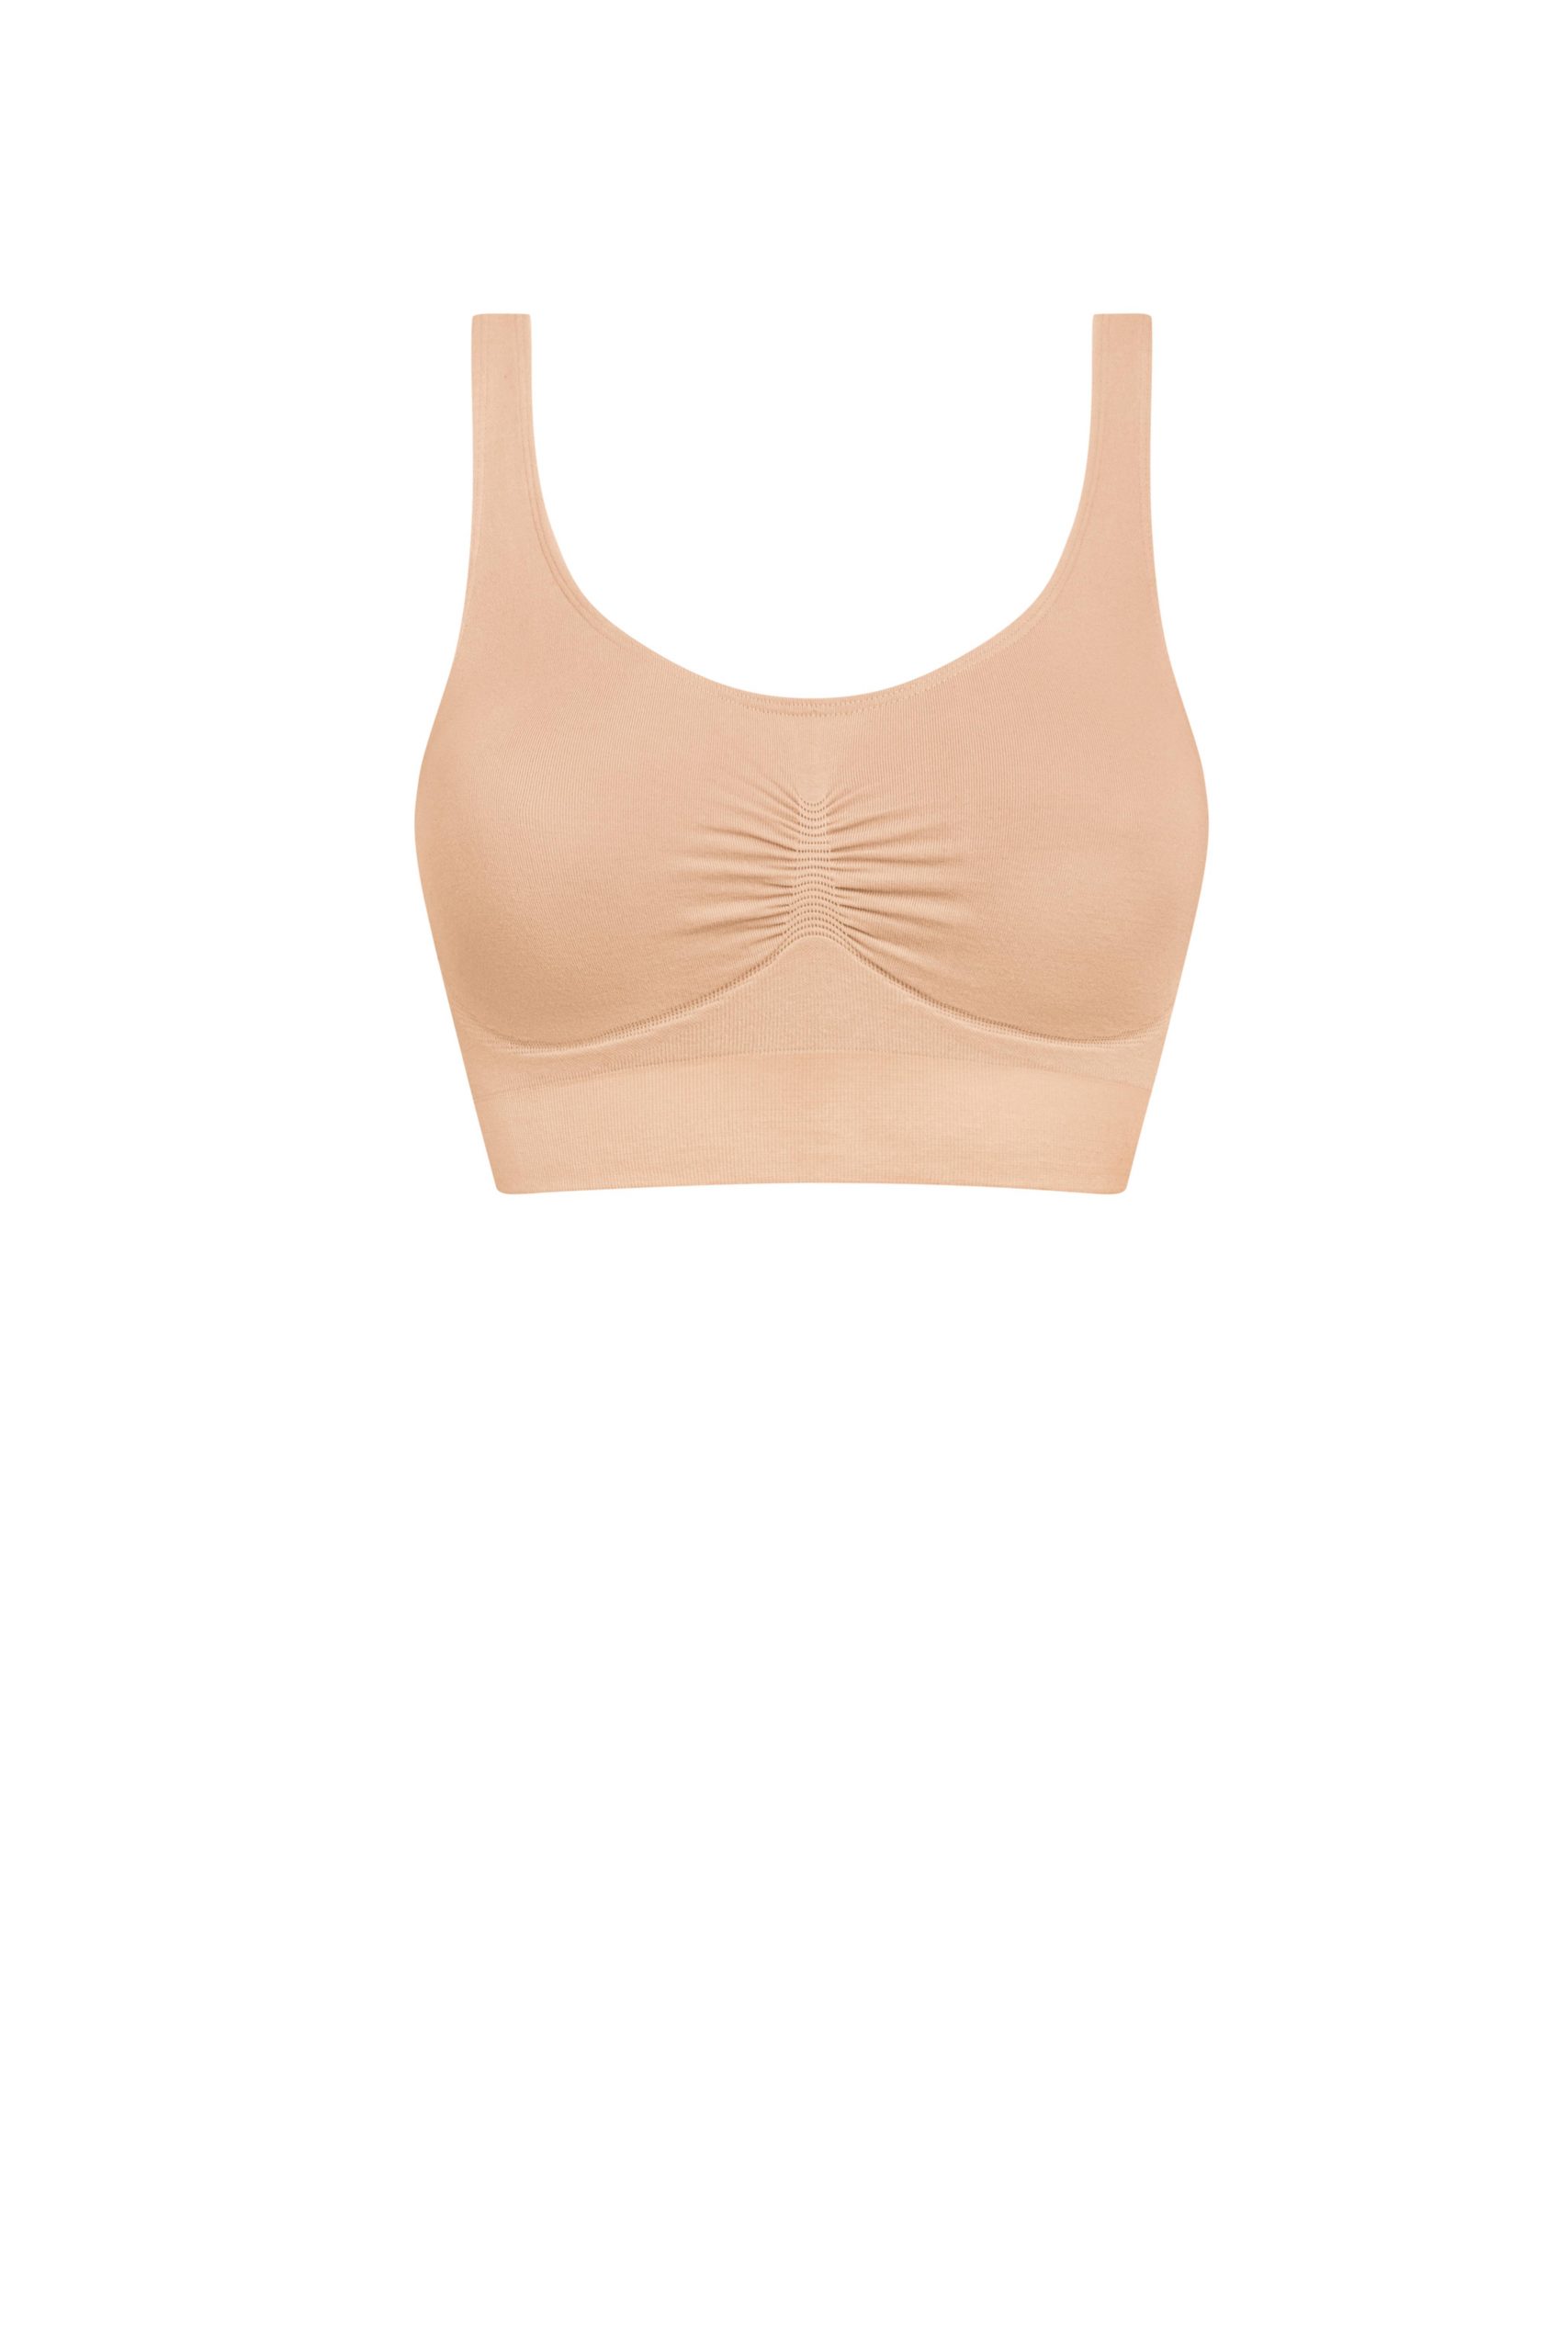 8 Mastectomy Bras ideas  mastectomy bra, breast forms, mastectomy